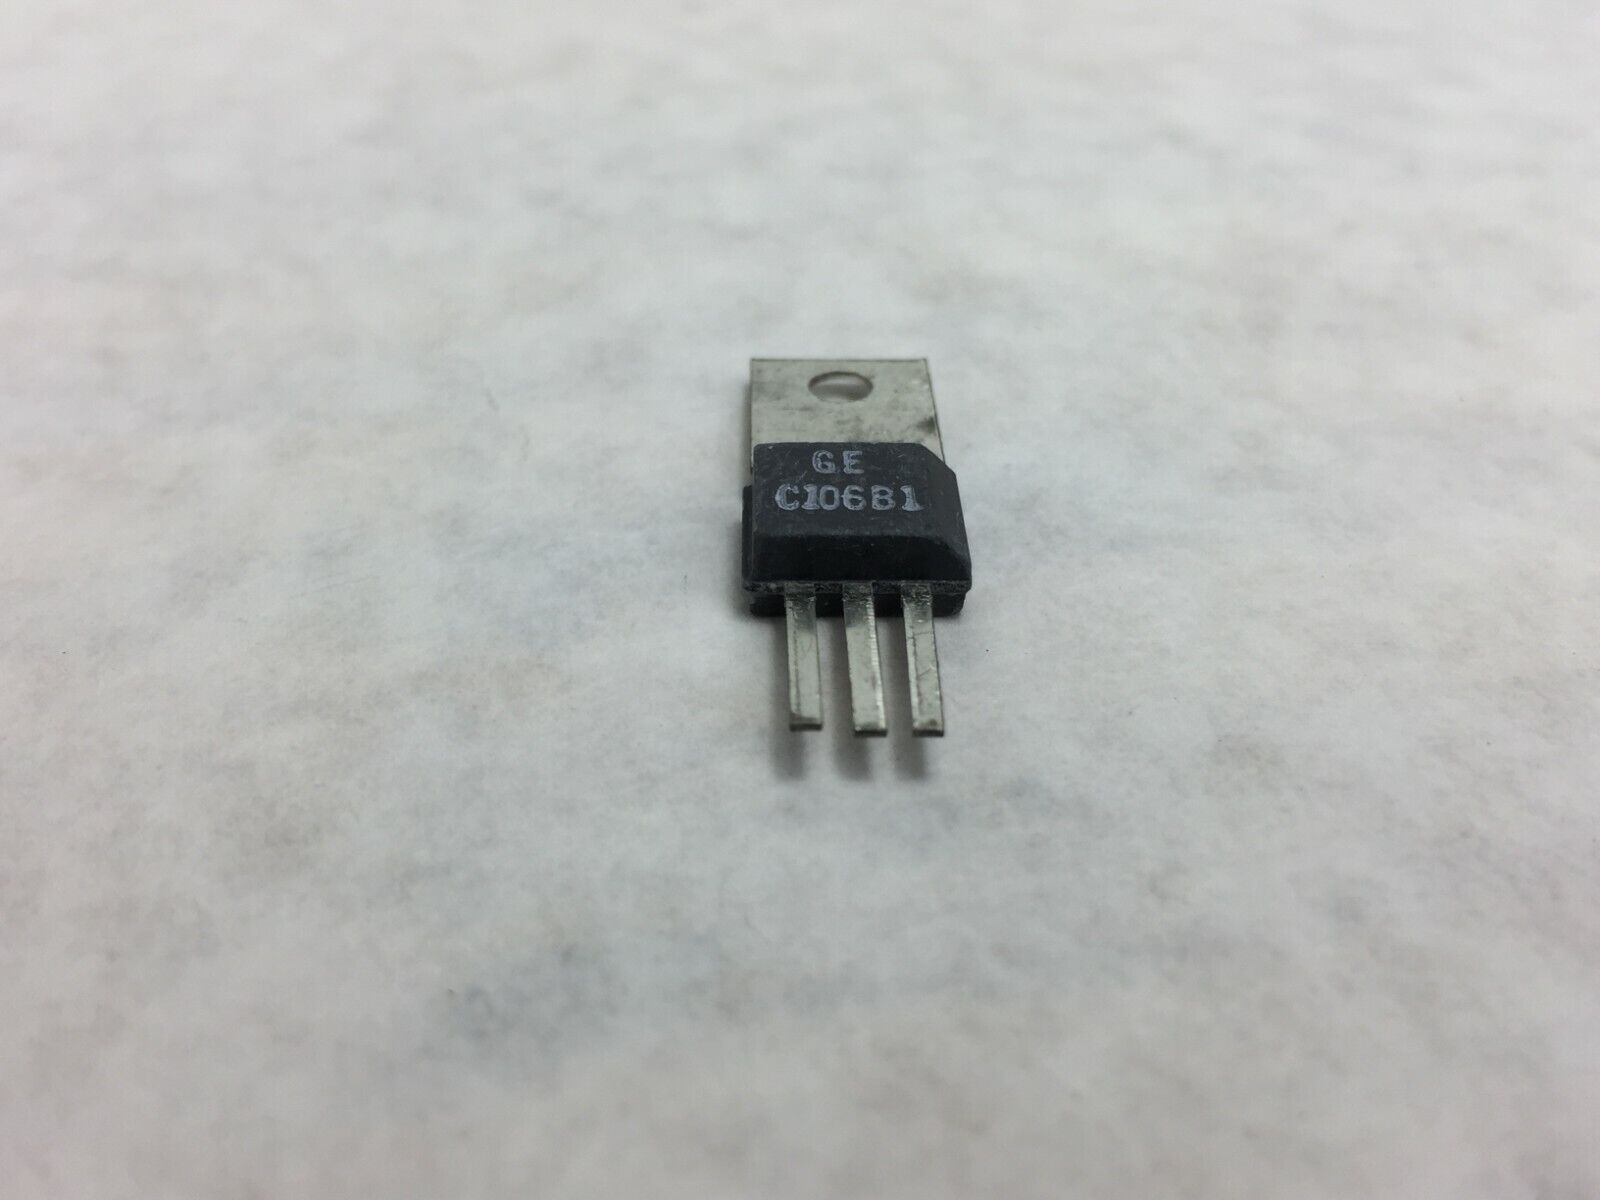 General Electric C106B1 Transistor Lot of 7  NOS